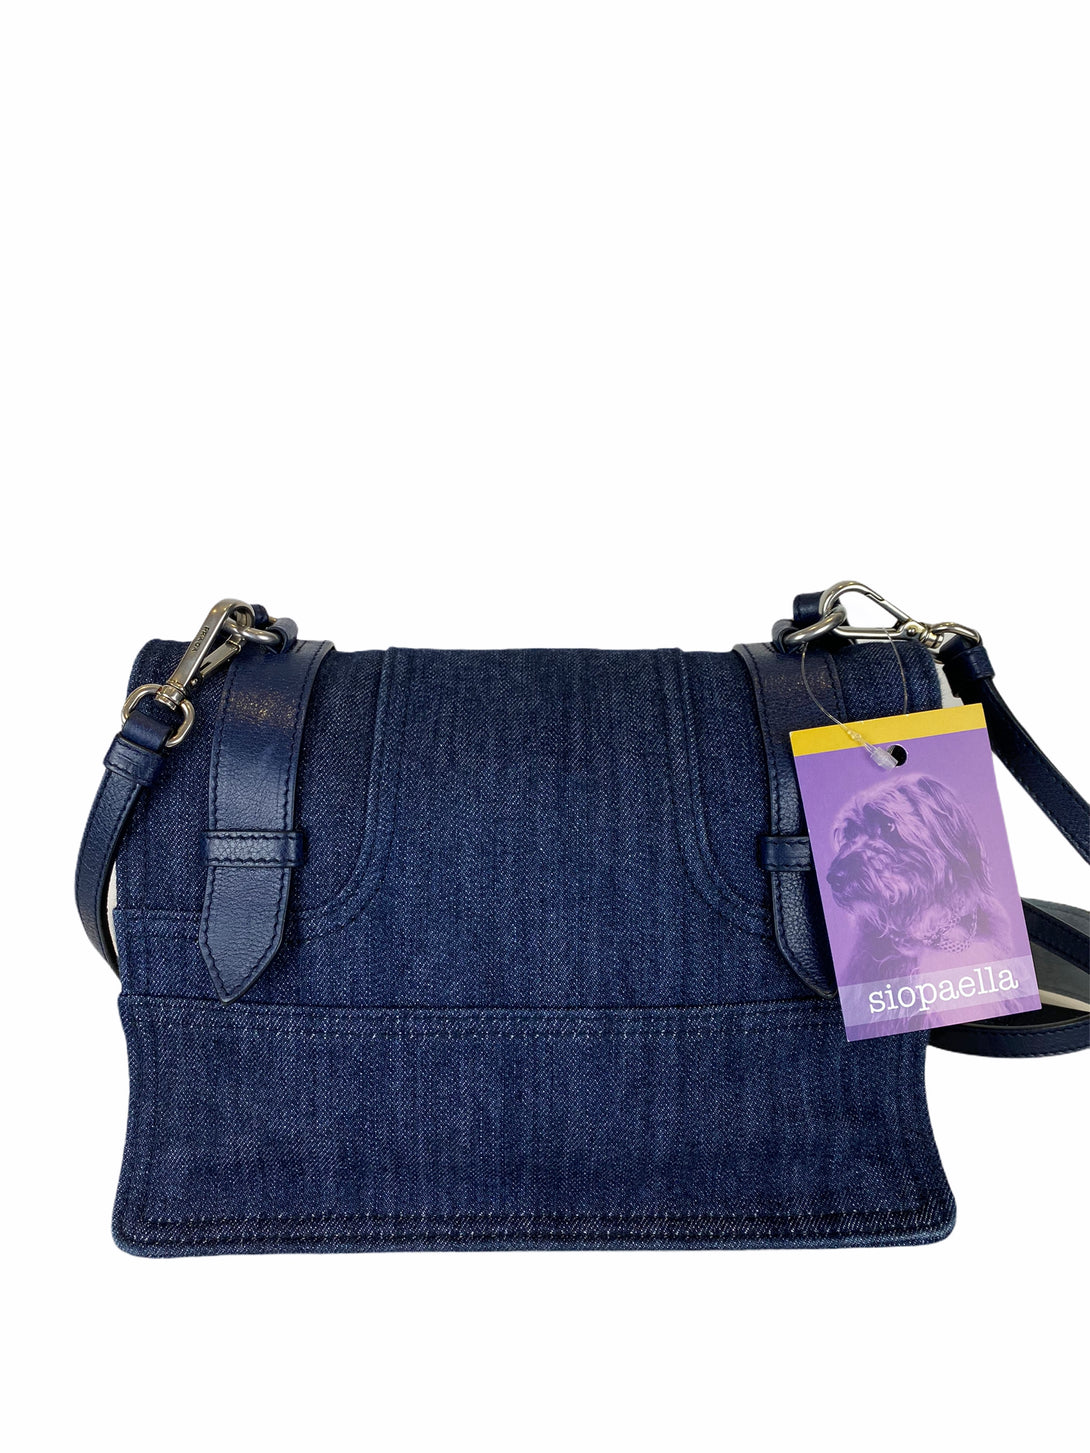 Prada Leather & Denim Shoulder Bag - As Seen On Instagram 09/09/2020 - Siopaella Designer Exchange